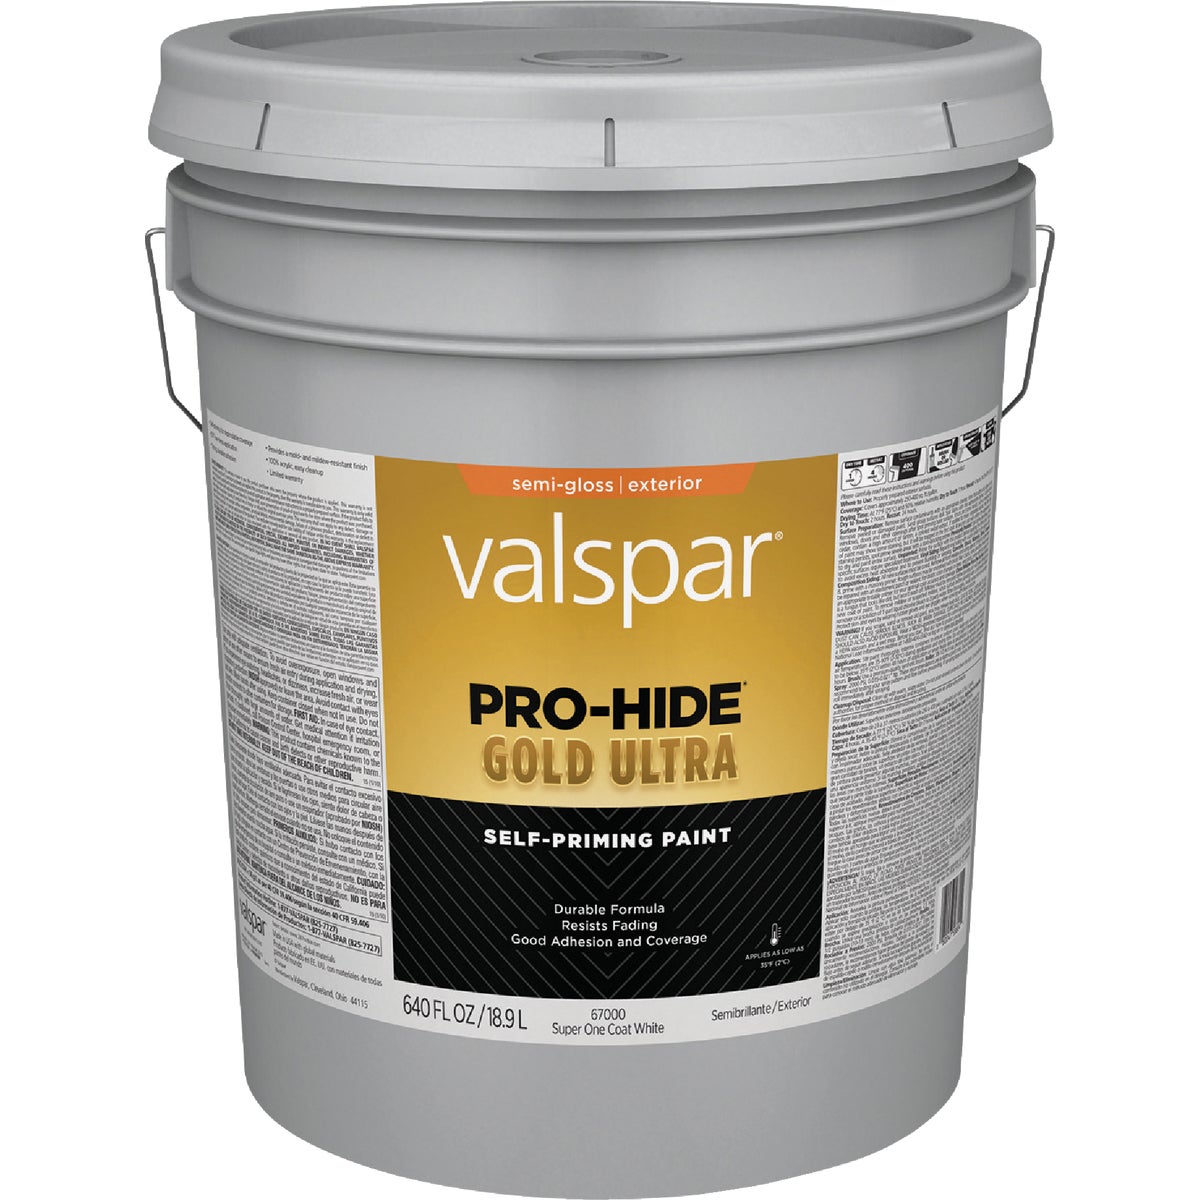 Valspar Pro-Hide Gold Ultra Latex Semi-Gloss Exterior House Paint, Super One-Coat White, 5 Gal.